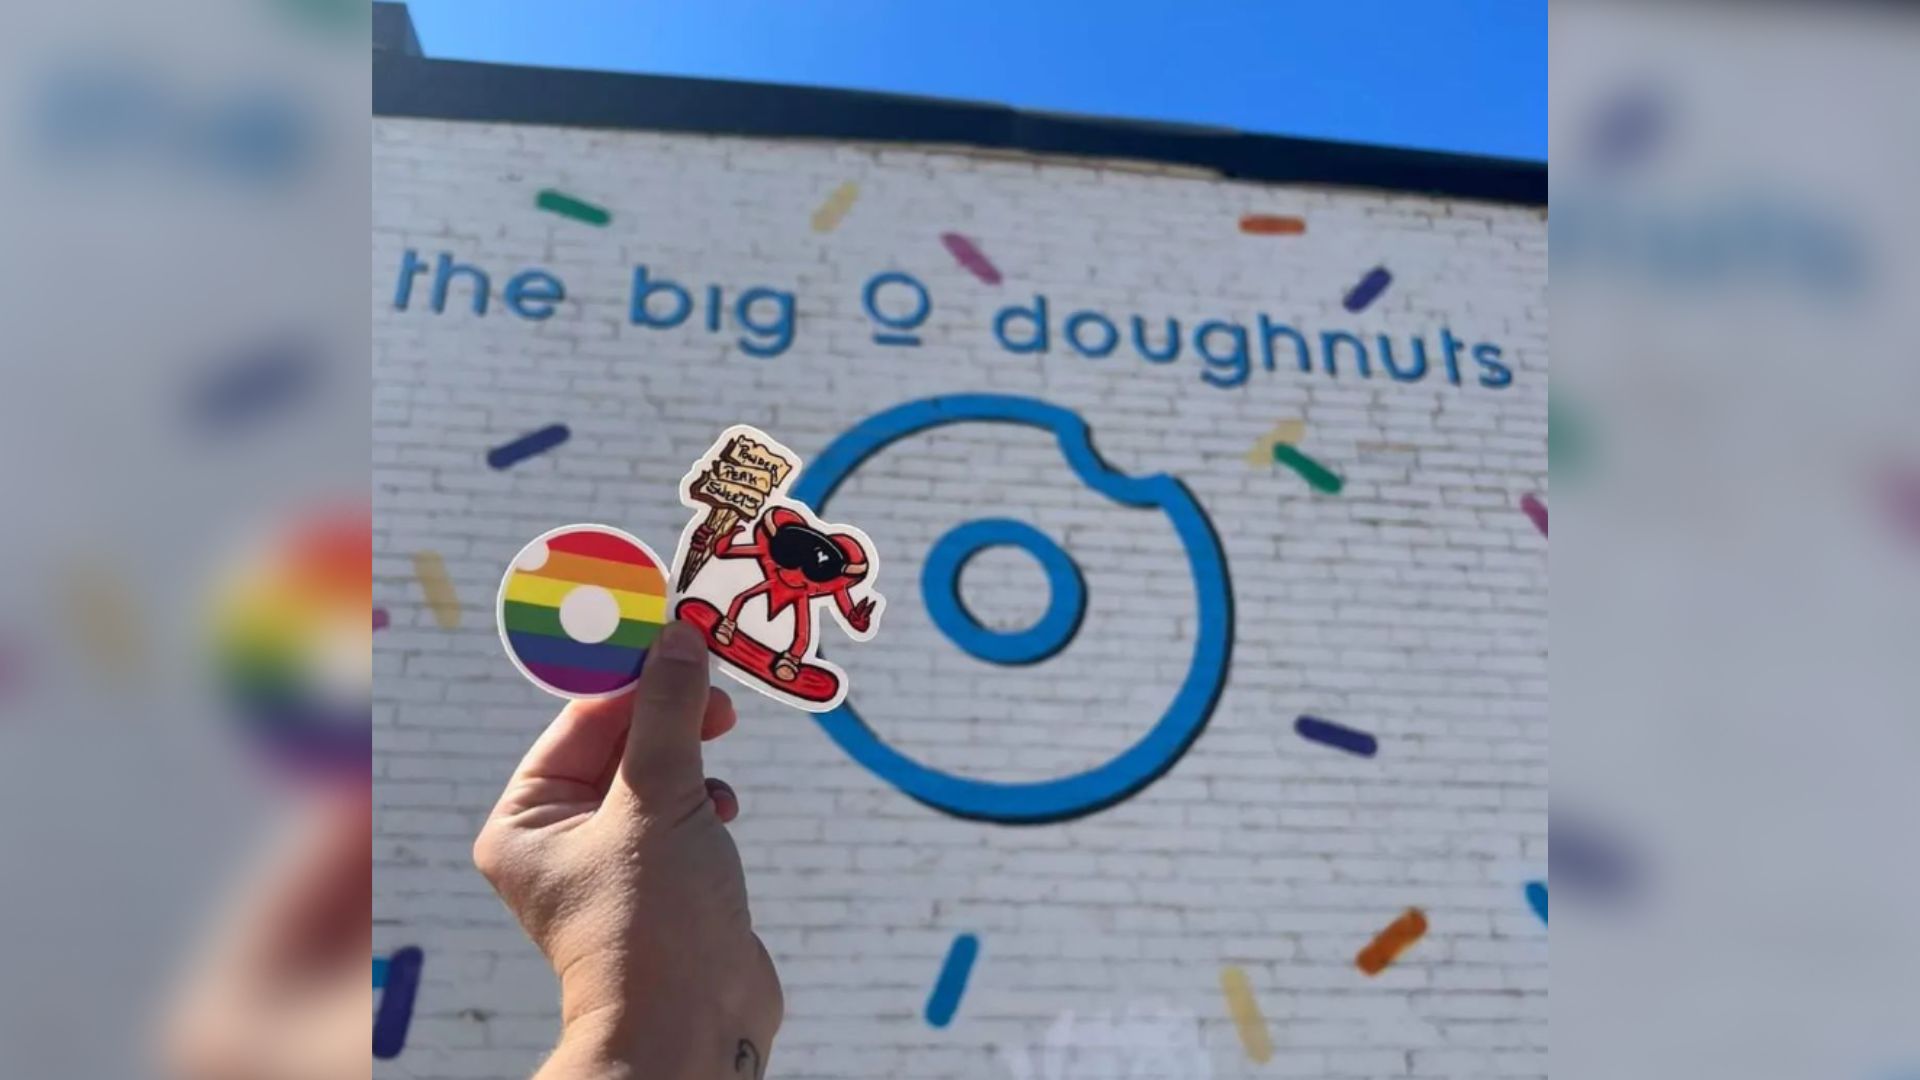 The Big O Doughnut shop has announced its last day, Jan. 15, 2023. Photo credit: The Big O Doughnut...